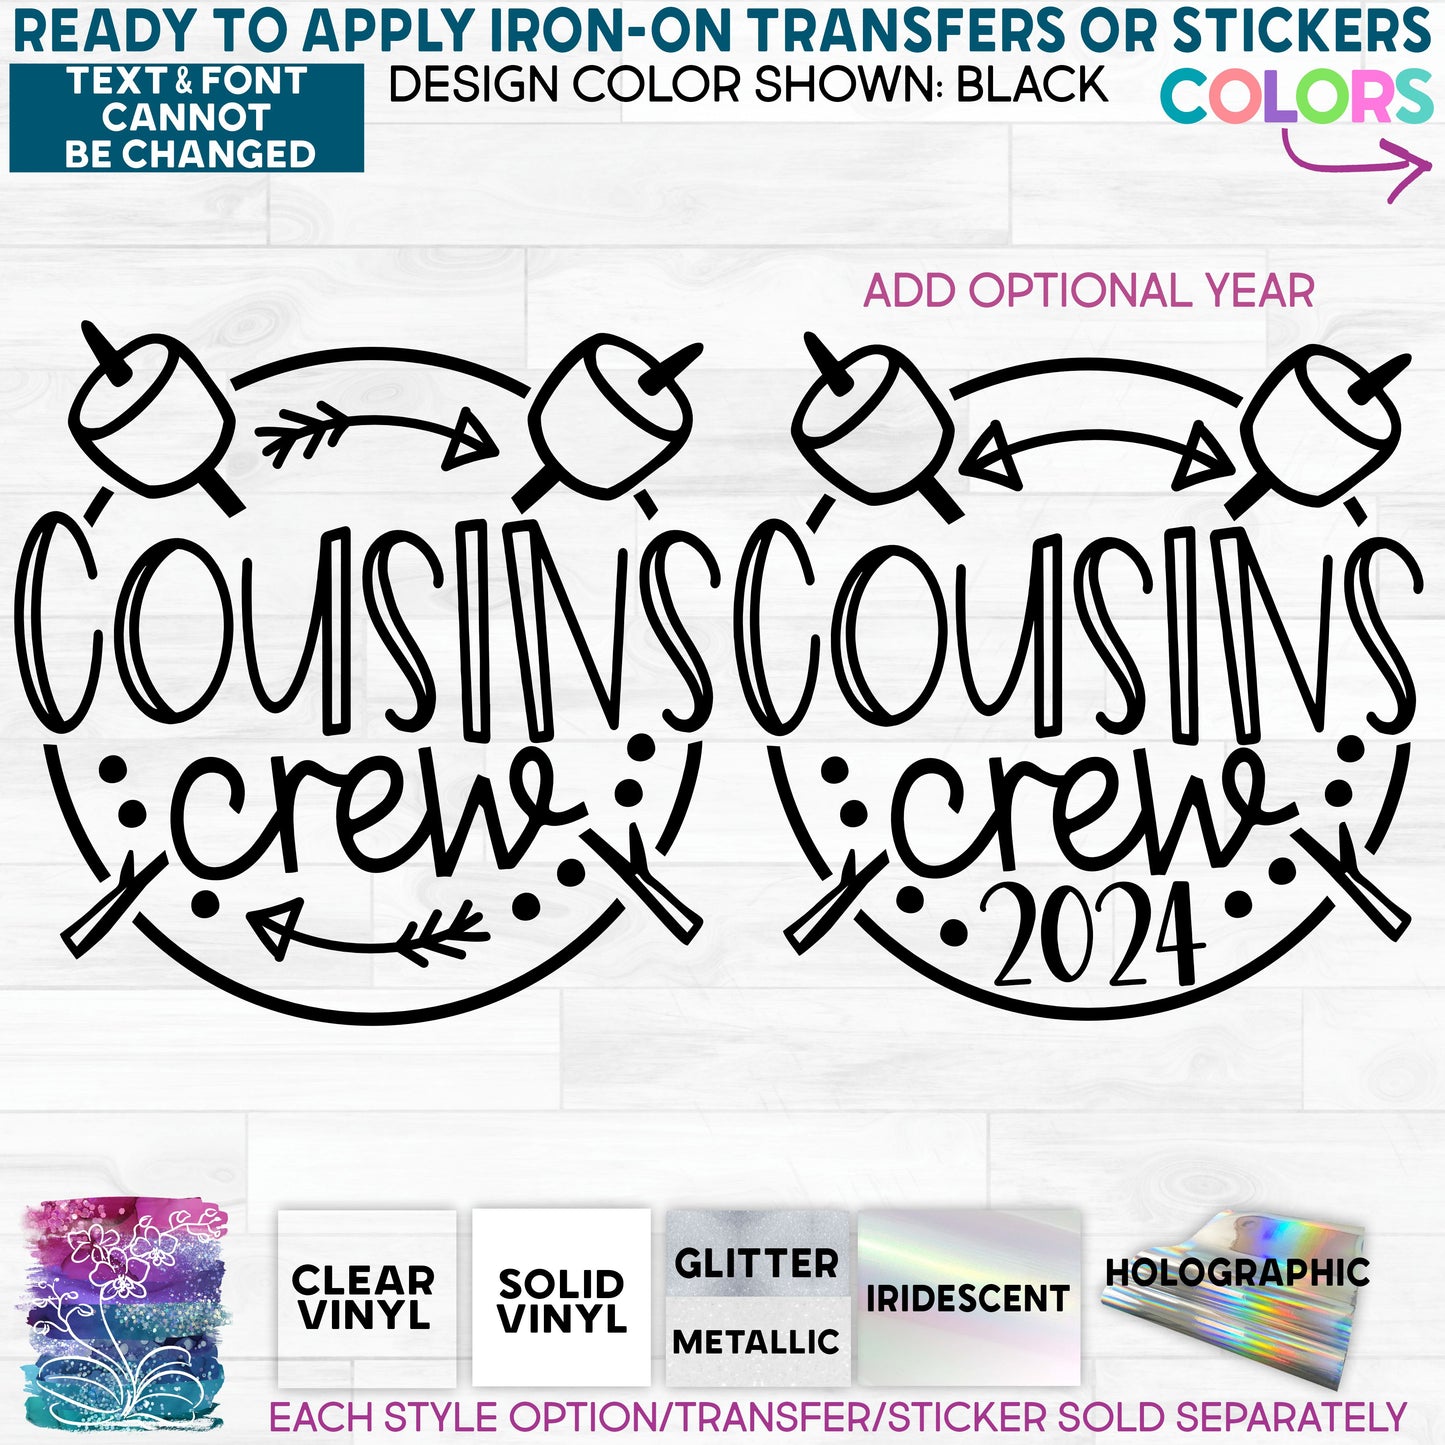 (s228-4X) Cousins Crew with Year Marshmallows Marshmallow Sticks Glitter or Vinyl Iron-On Transfer or Sticker